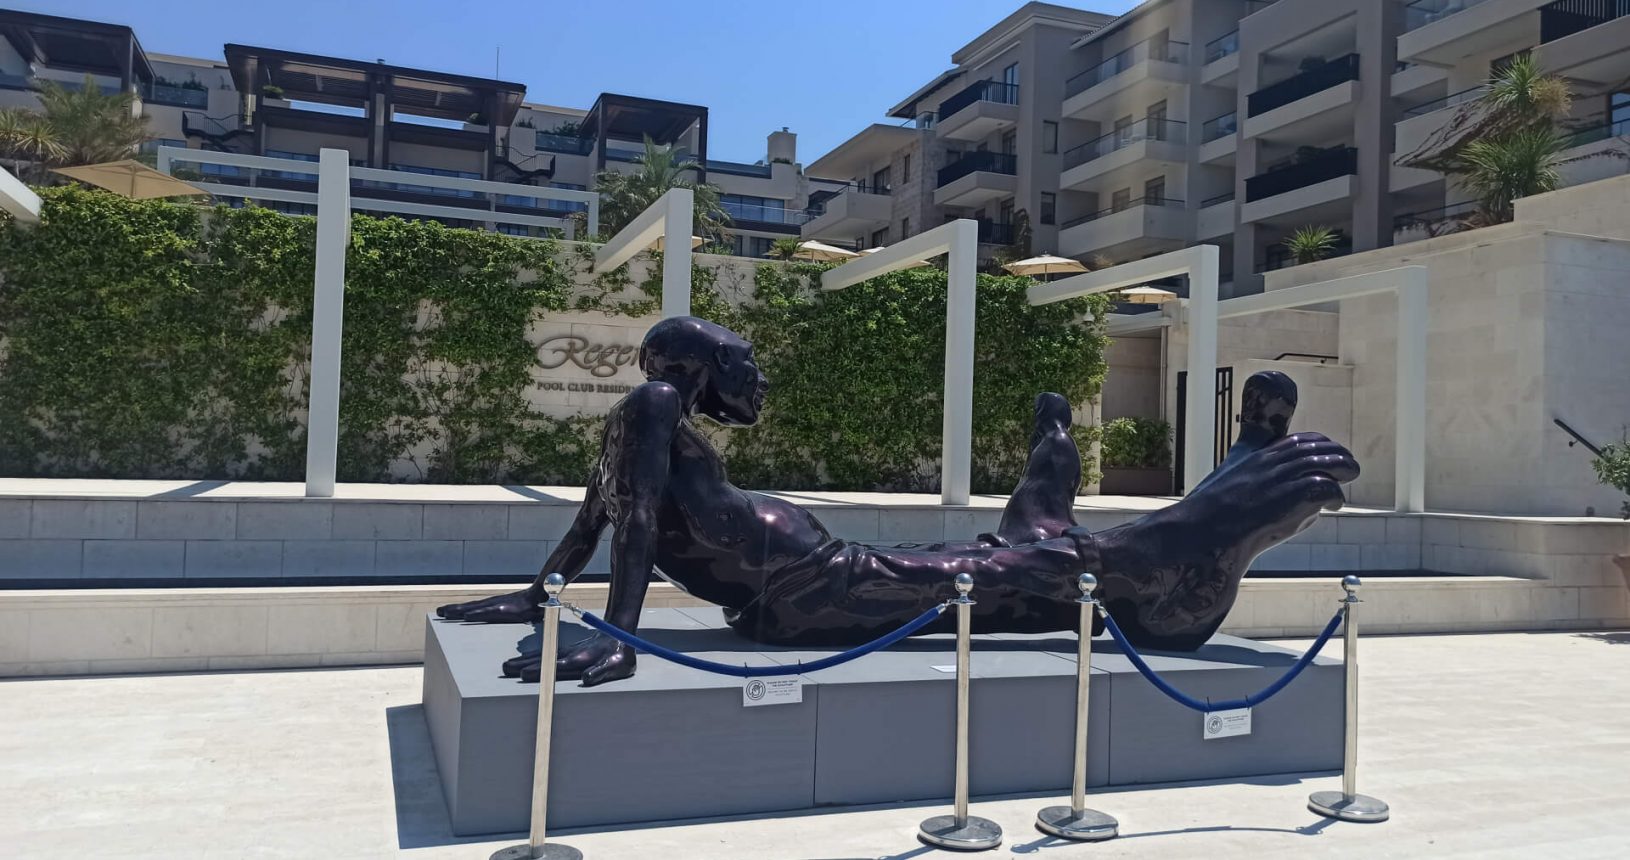 Summer sculpture 7 near 5 srar hotel in Porto Montenegro